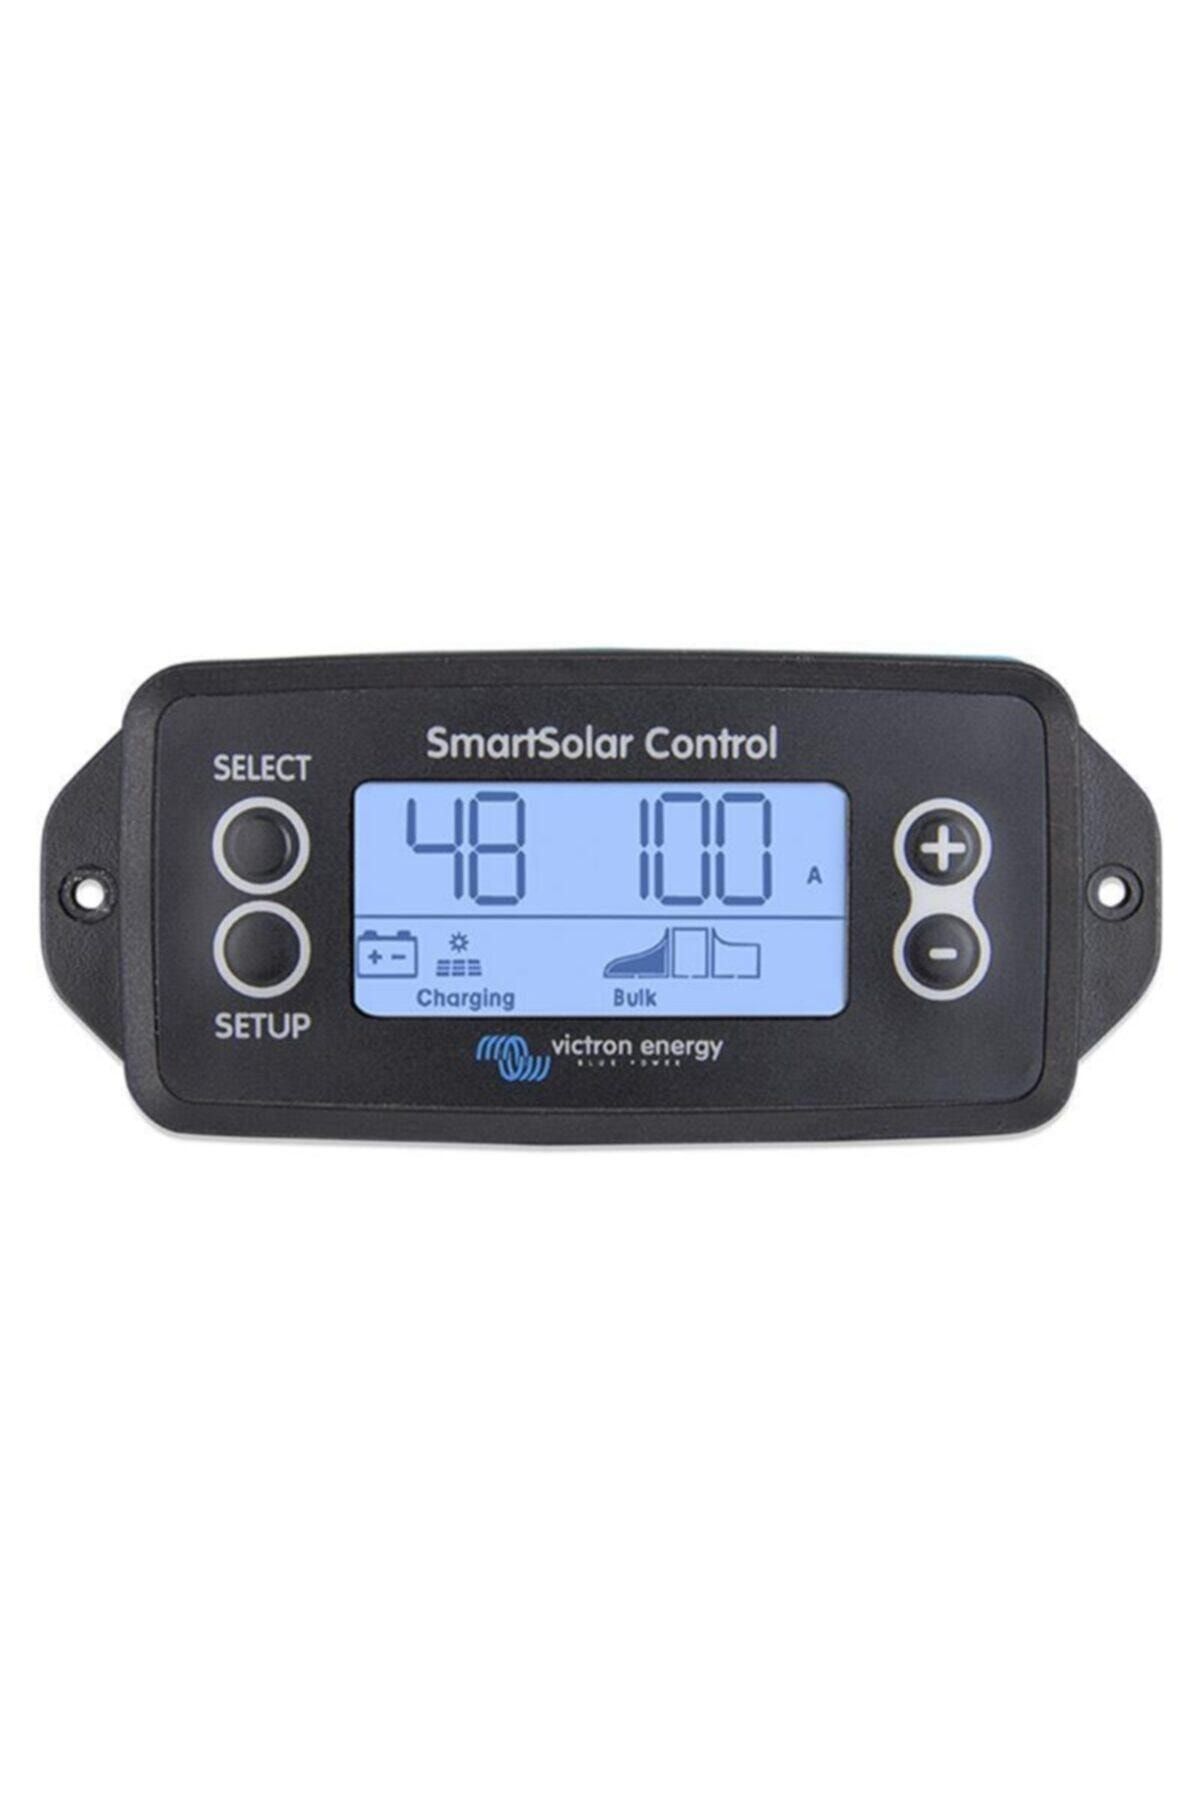 victron energy Smartsolar Pluggable Kontrol Ekranı Scc900650010